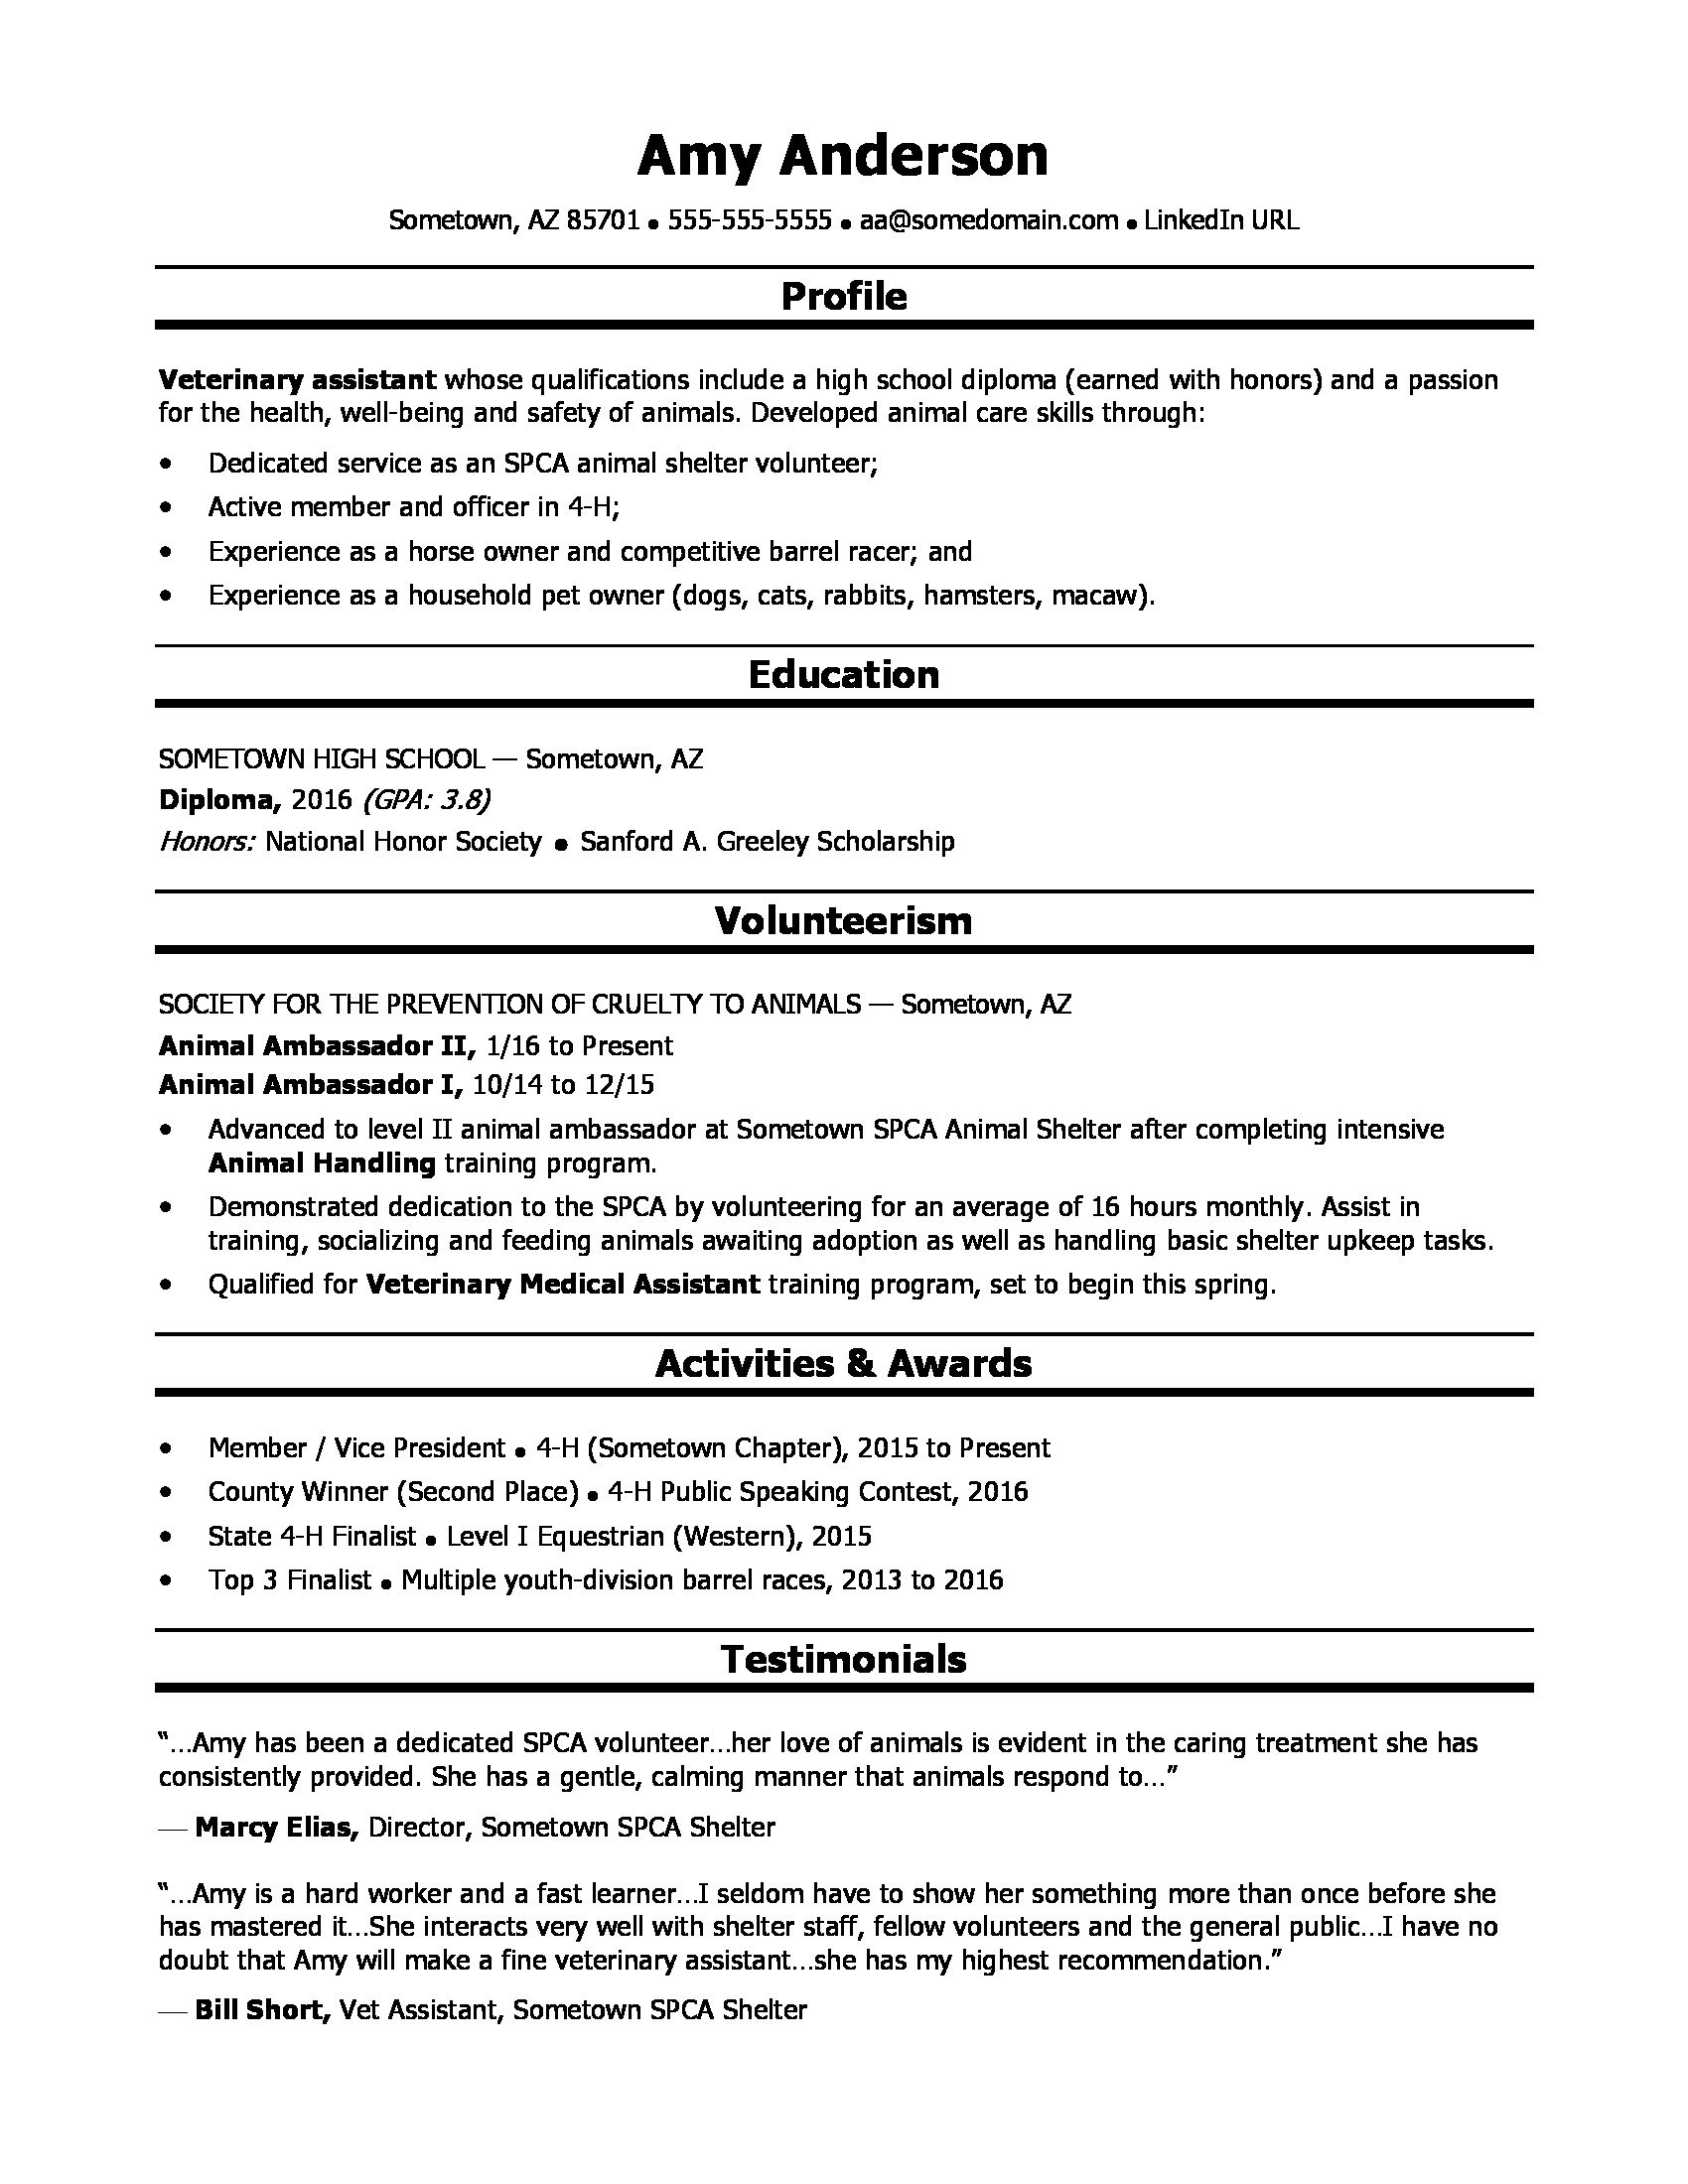 Resume Writing Template for High School Students High School Grad Resume Sample Monster.com